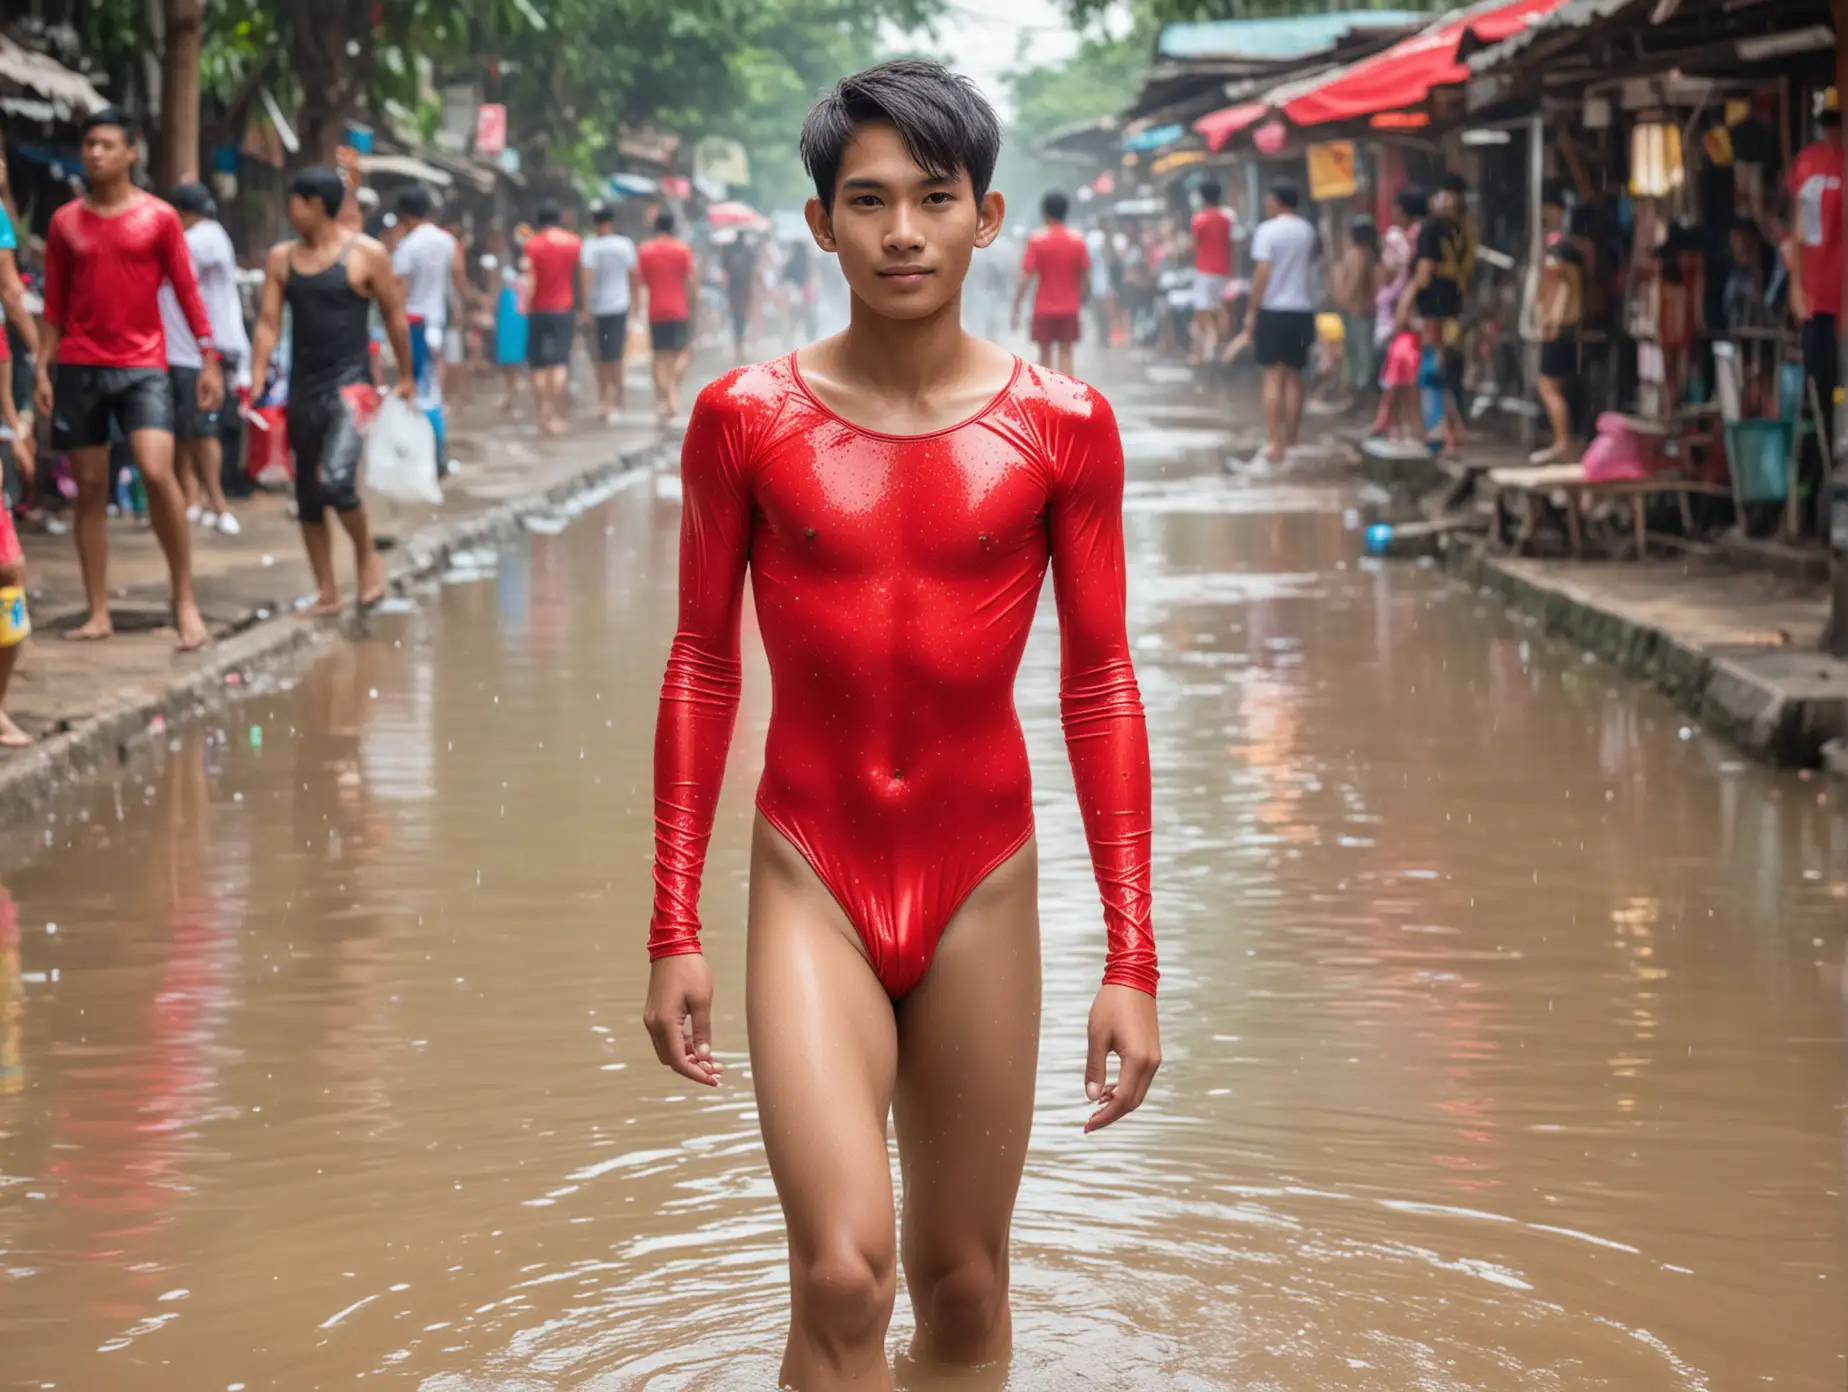 Elegant-Thai-Boy-in-SkinTight-Red-Leotard-Celebrating-Songkran-Festival